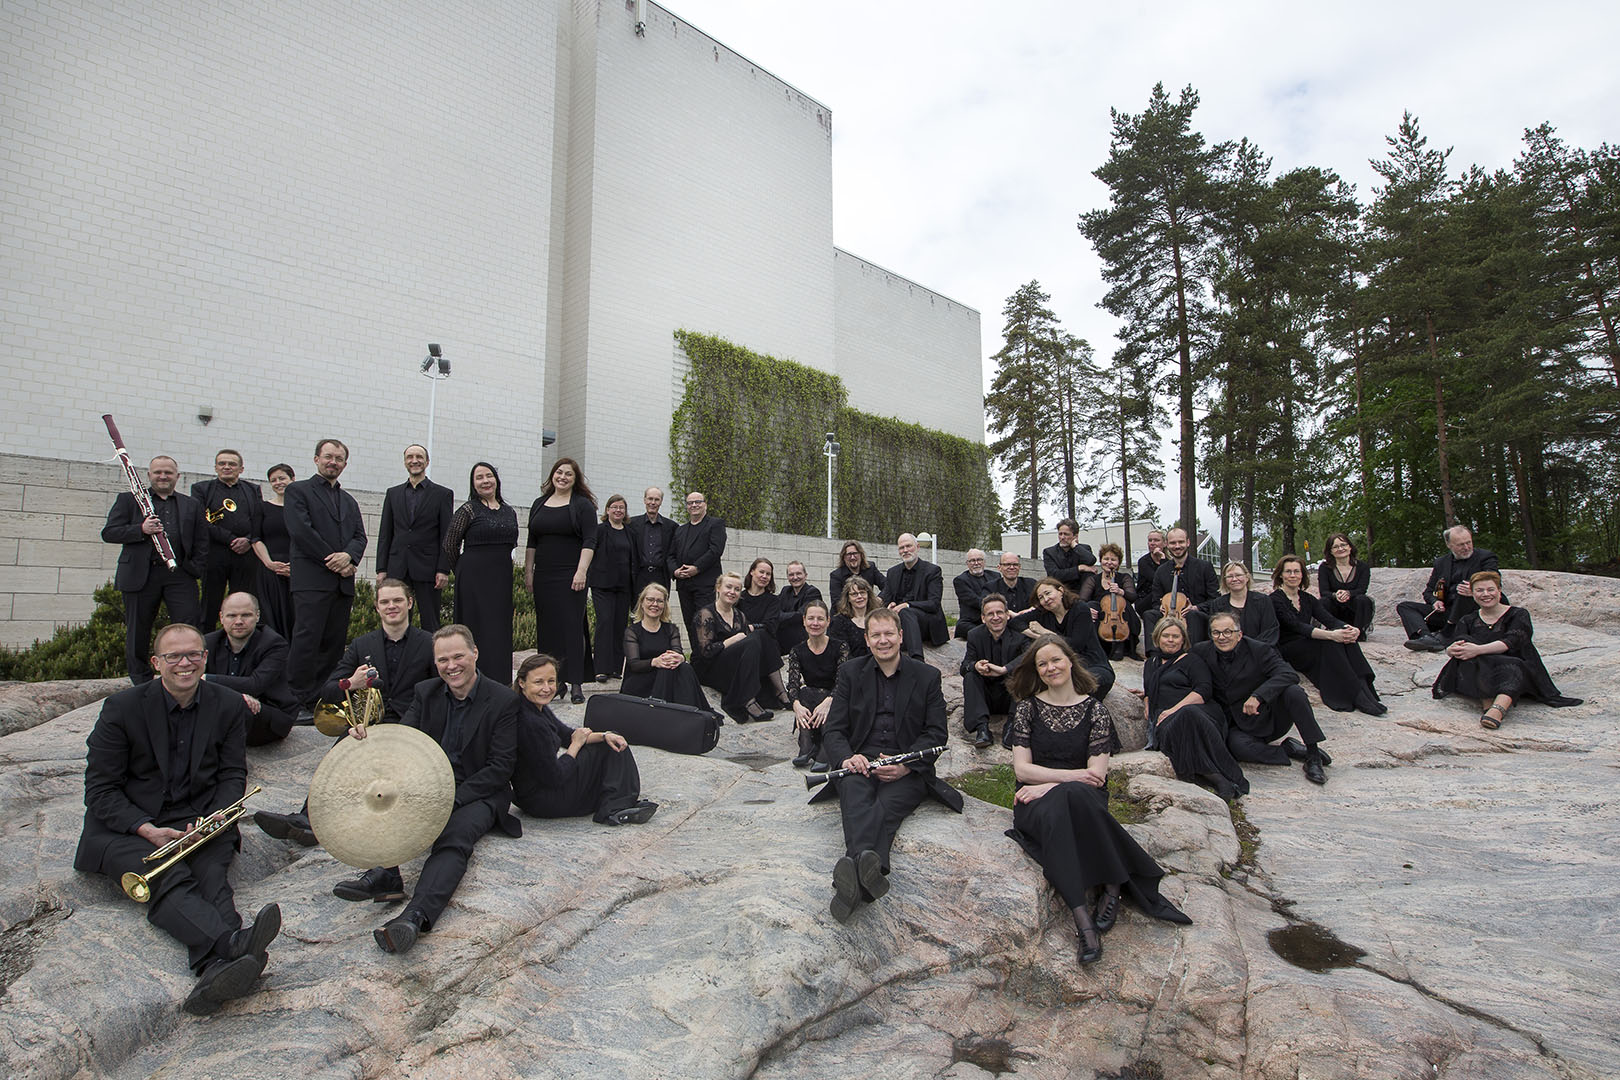 Tapiola Sinfonietta consists of 43 musicians. Photo: Olli Häkämies.